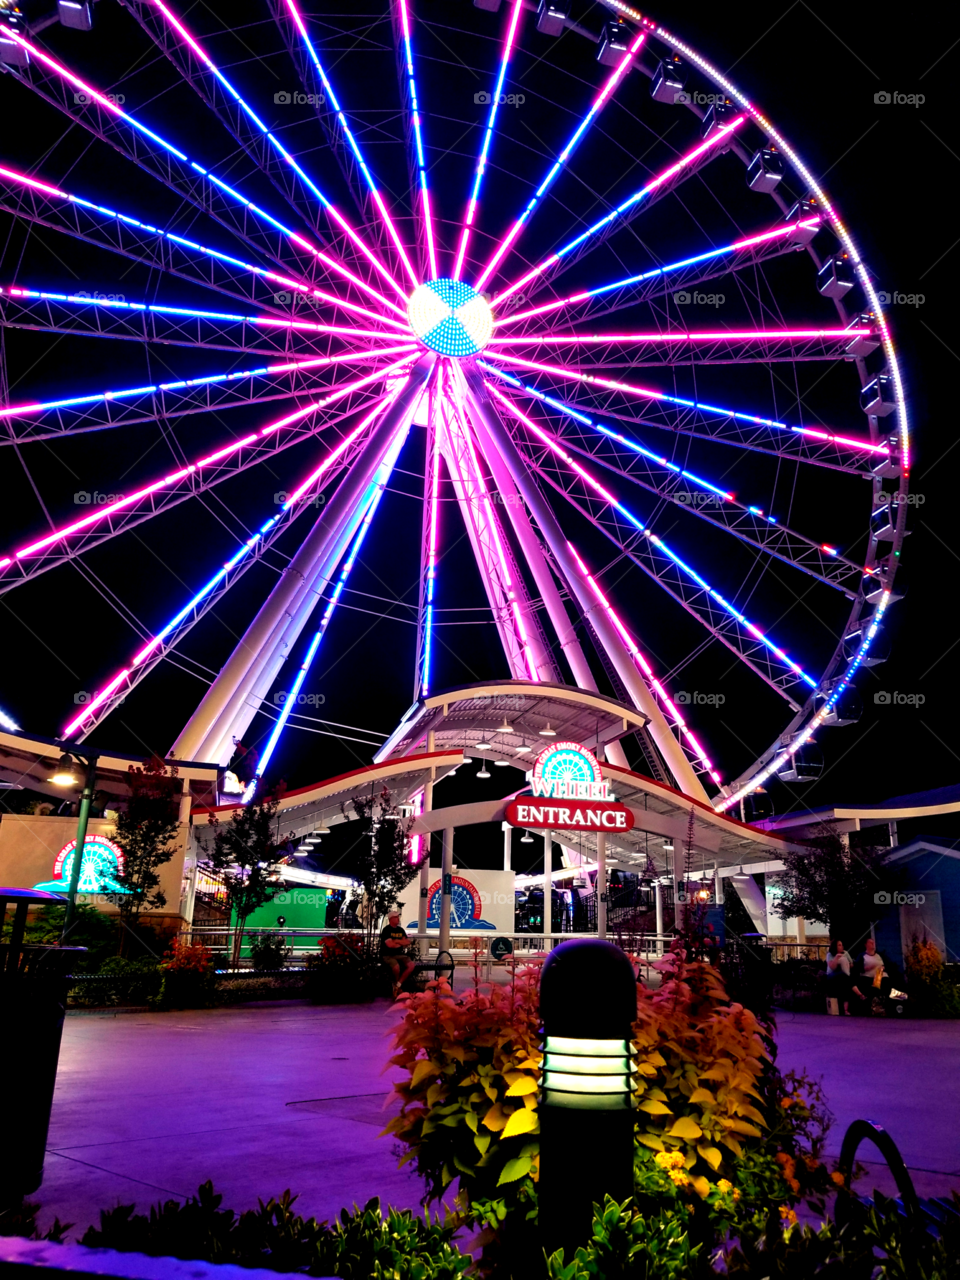 Ferris-wheel